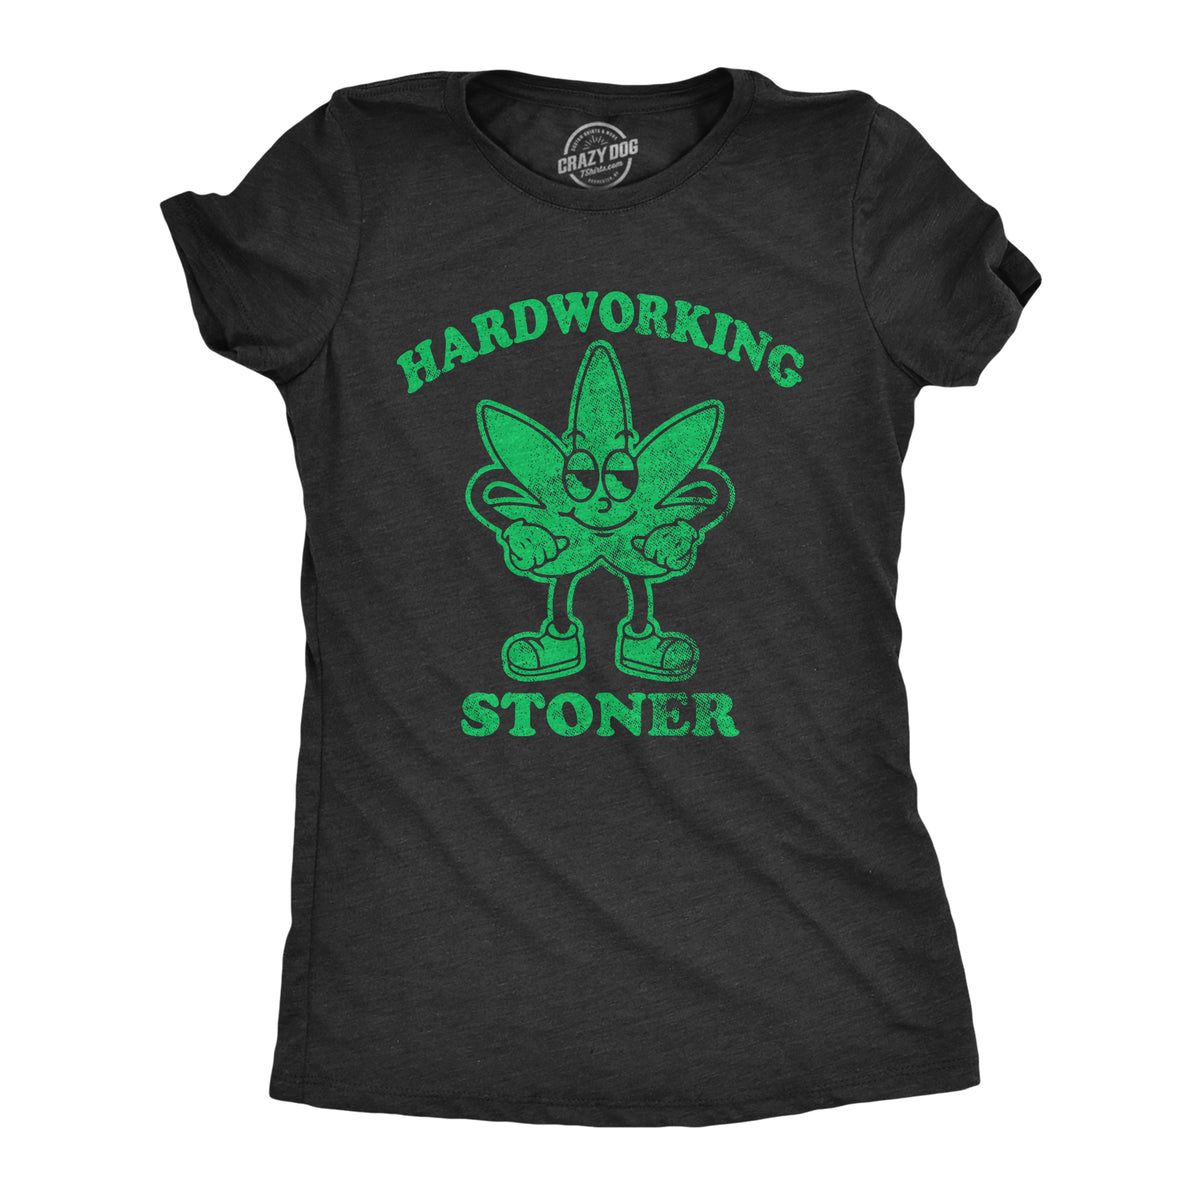 Funny Heather Black - STONER Hardworking Stoner Womens T Shirt Nerdy 420 sarcastic Tee